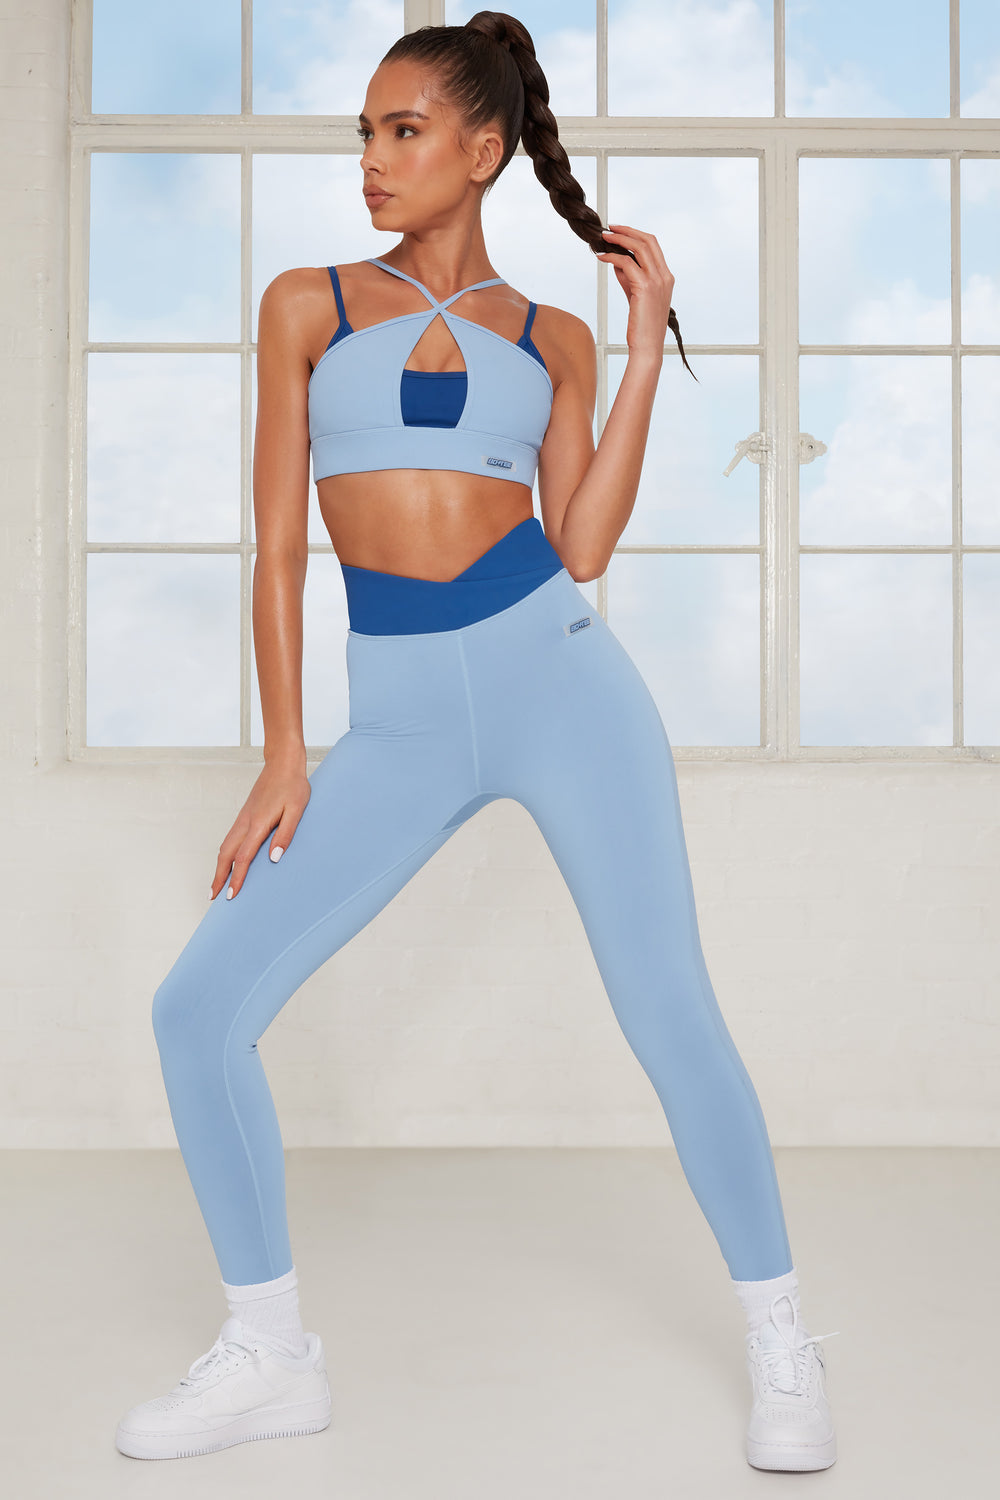 Blue Sports Leggings - Advanced Fit | shop-leggings.com